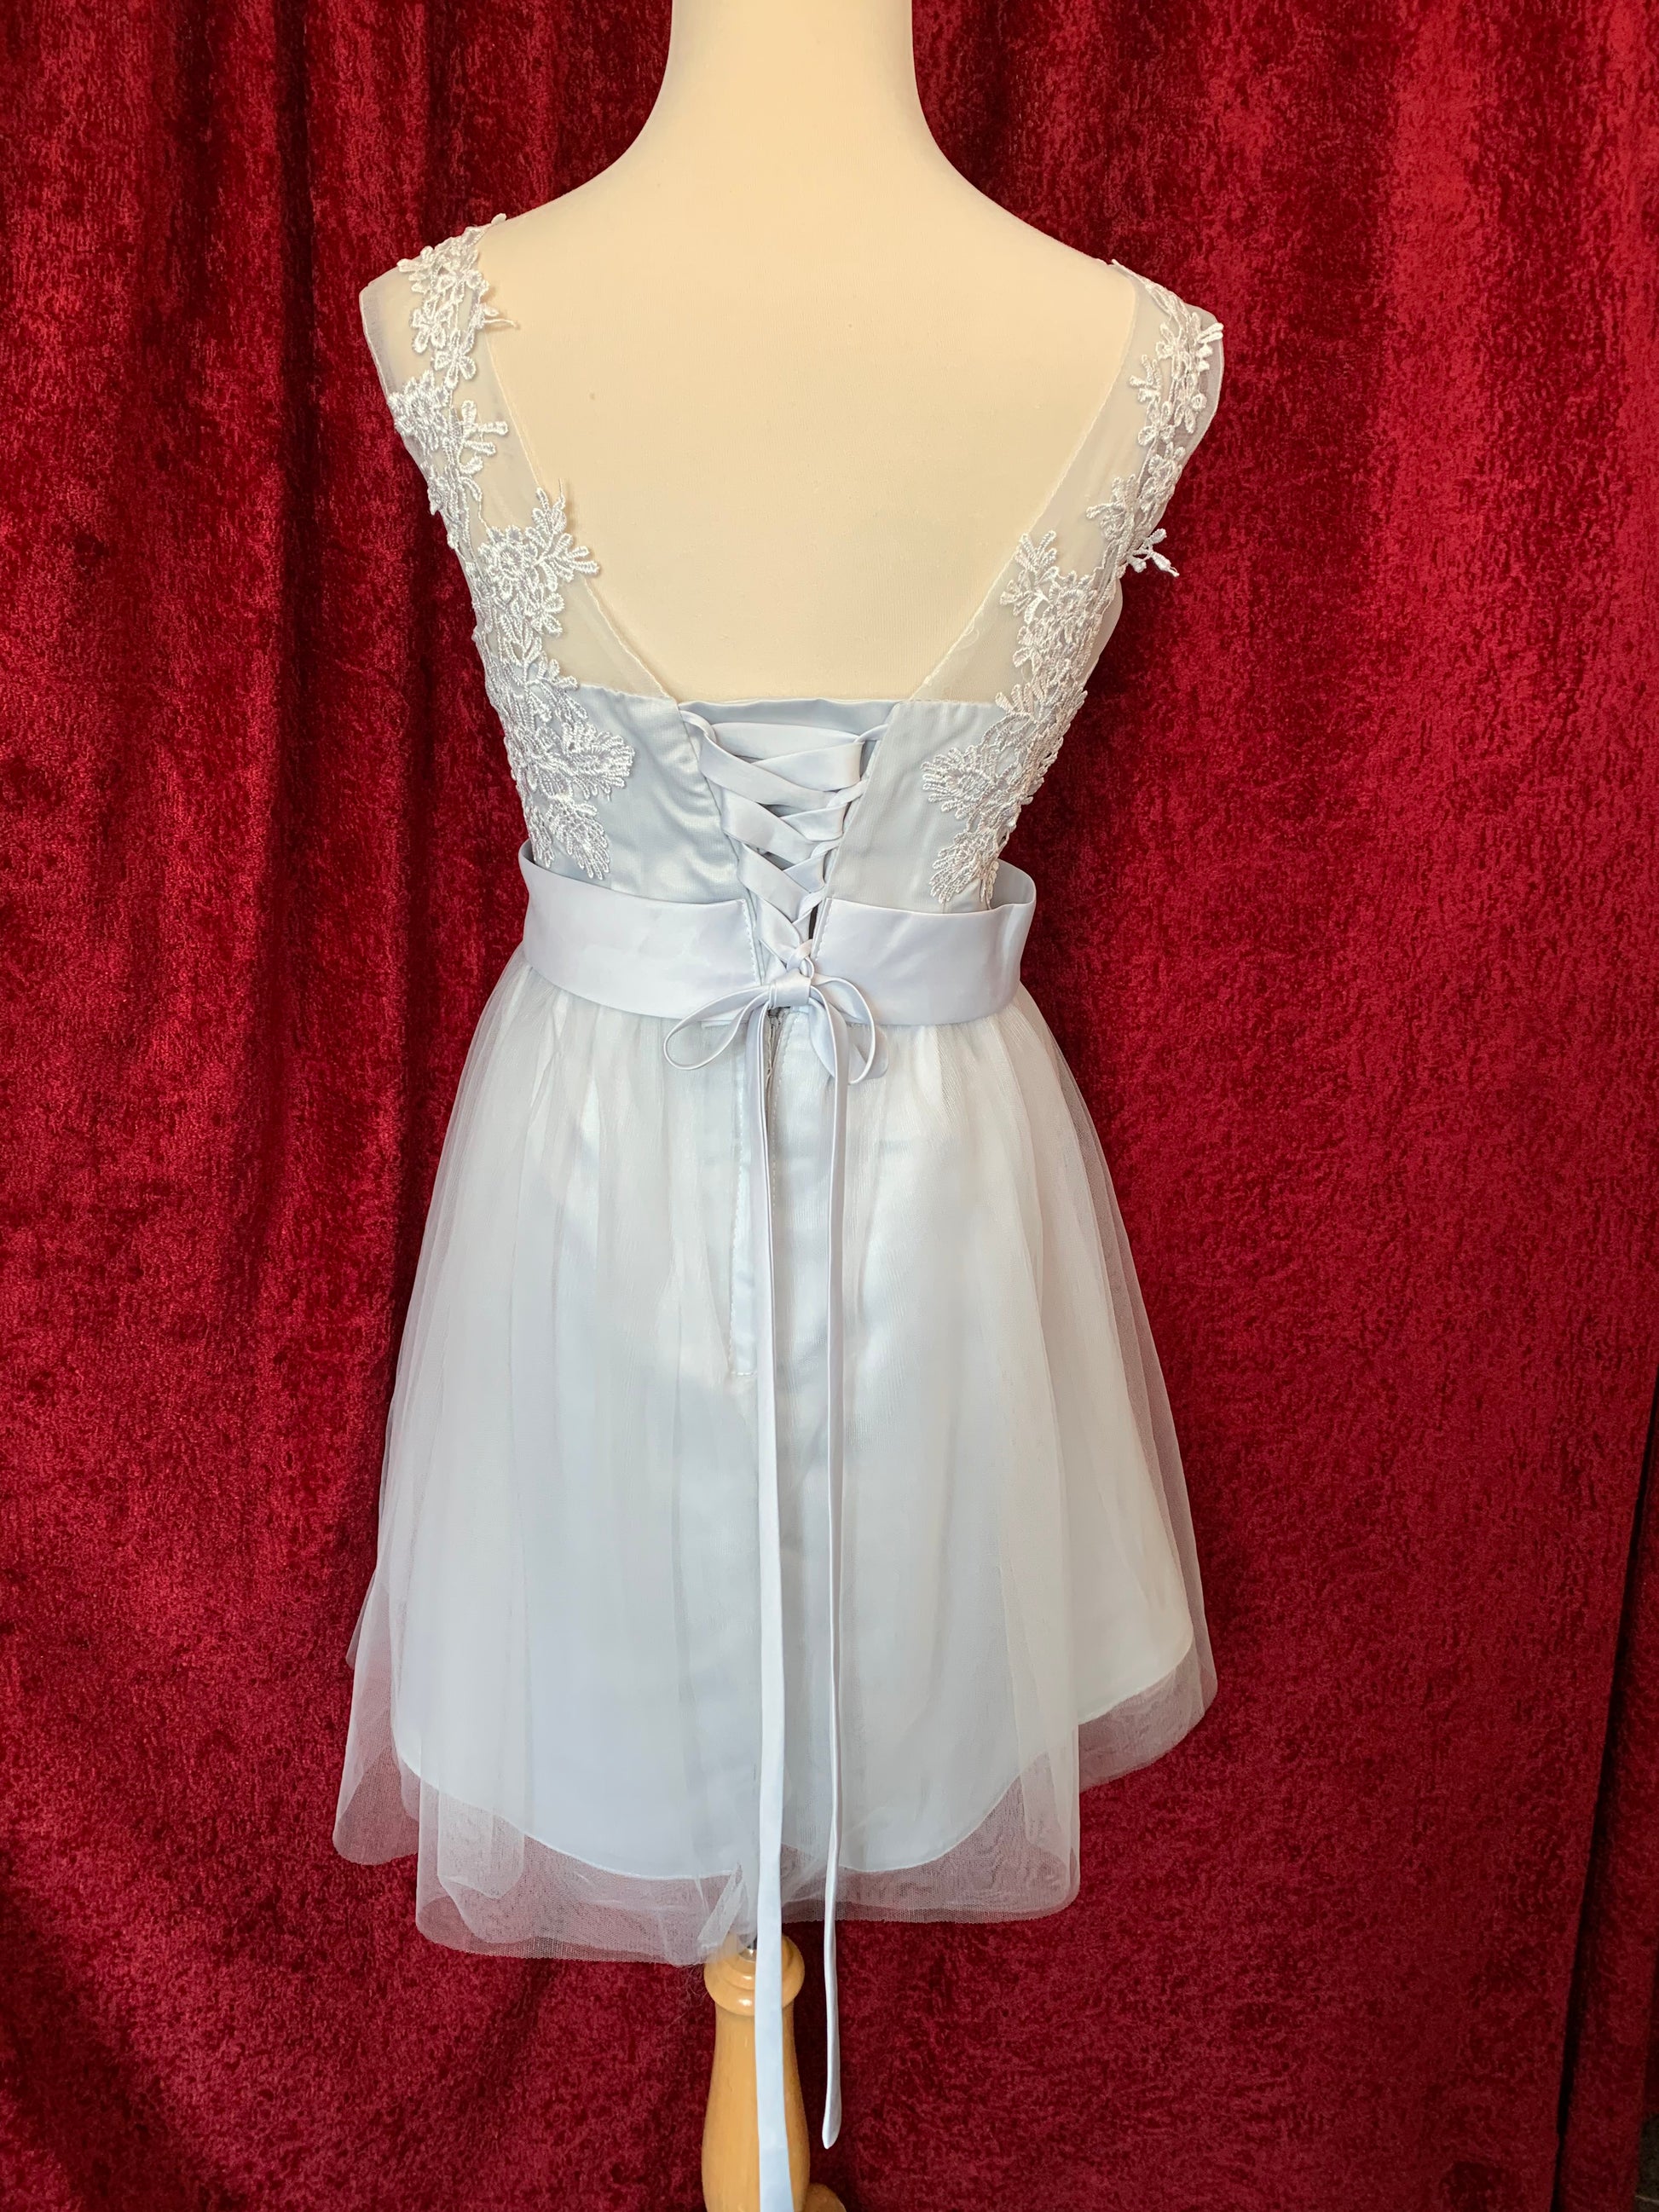 Short Tulle Dress Size 16 Style HJZY65 - MISS LESTER'S 